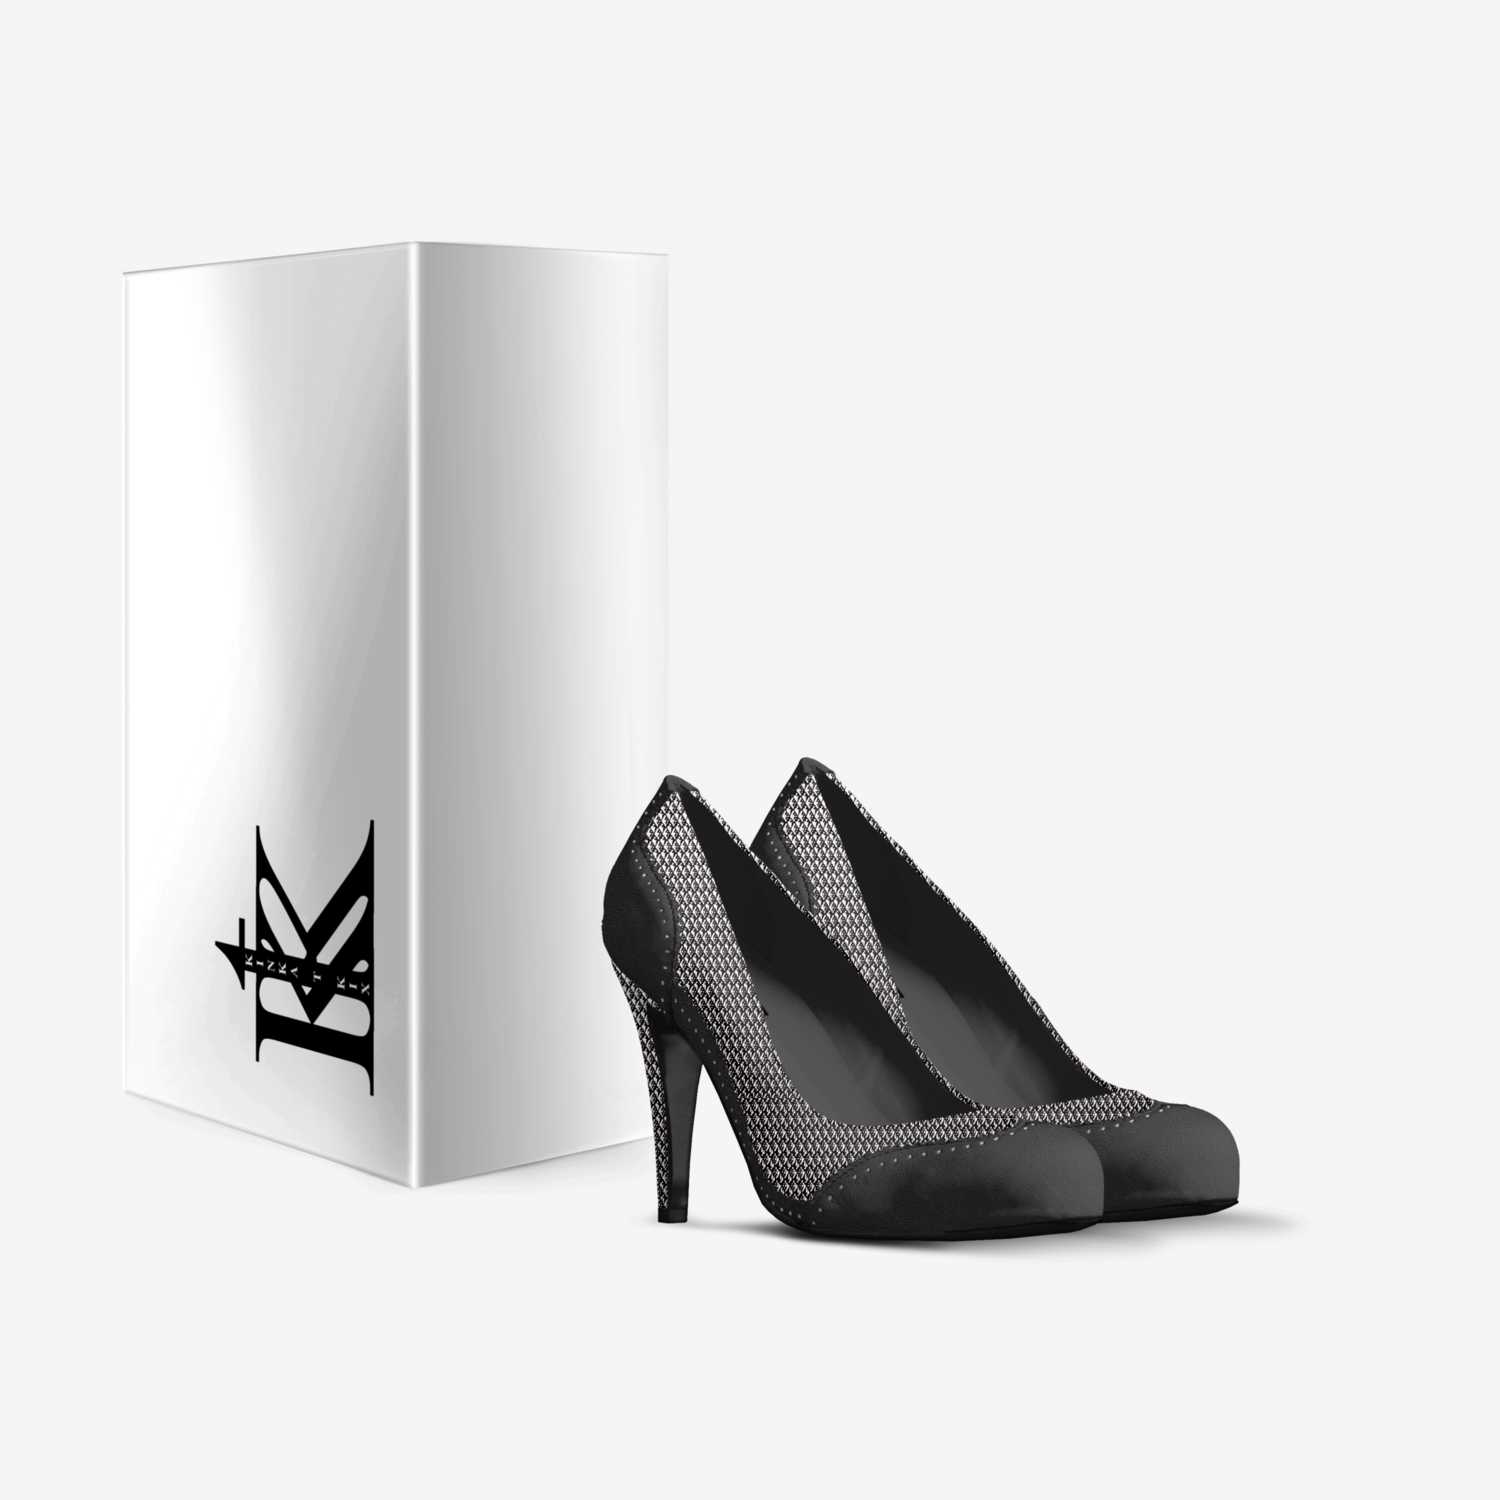 Kaoia custom made in Italy shoes by Kinka T Kix | Box view